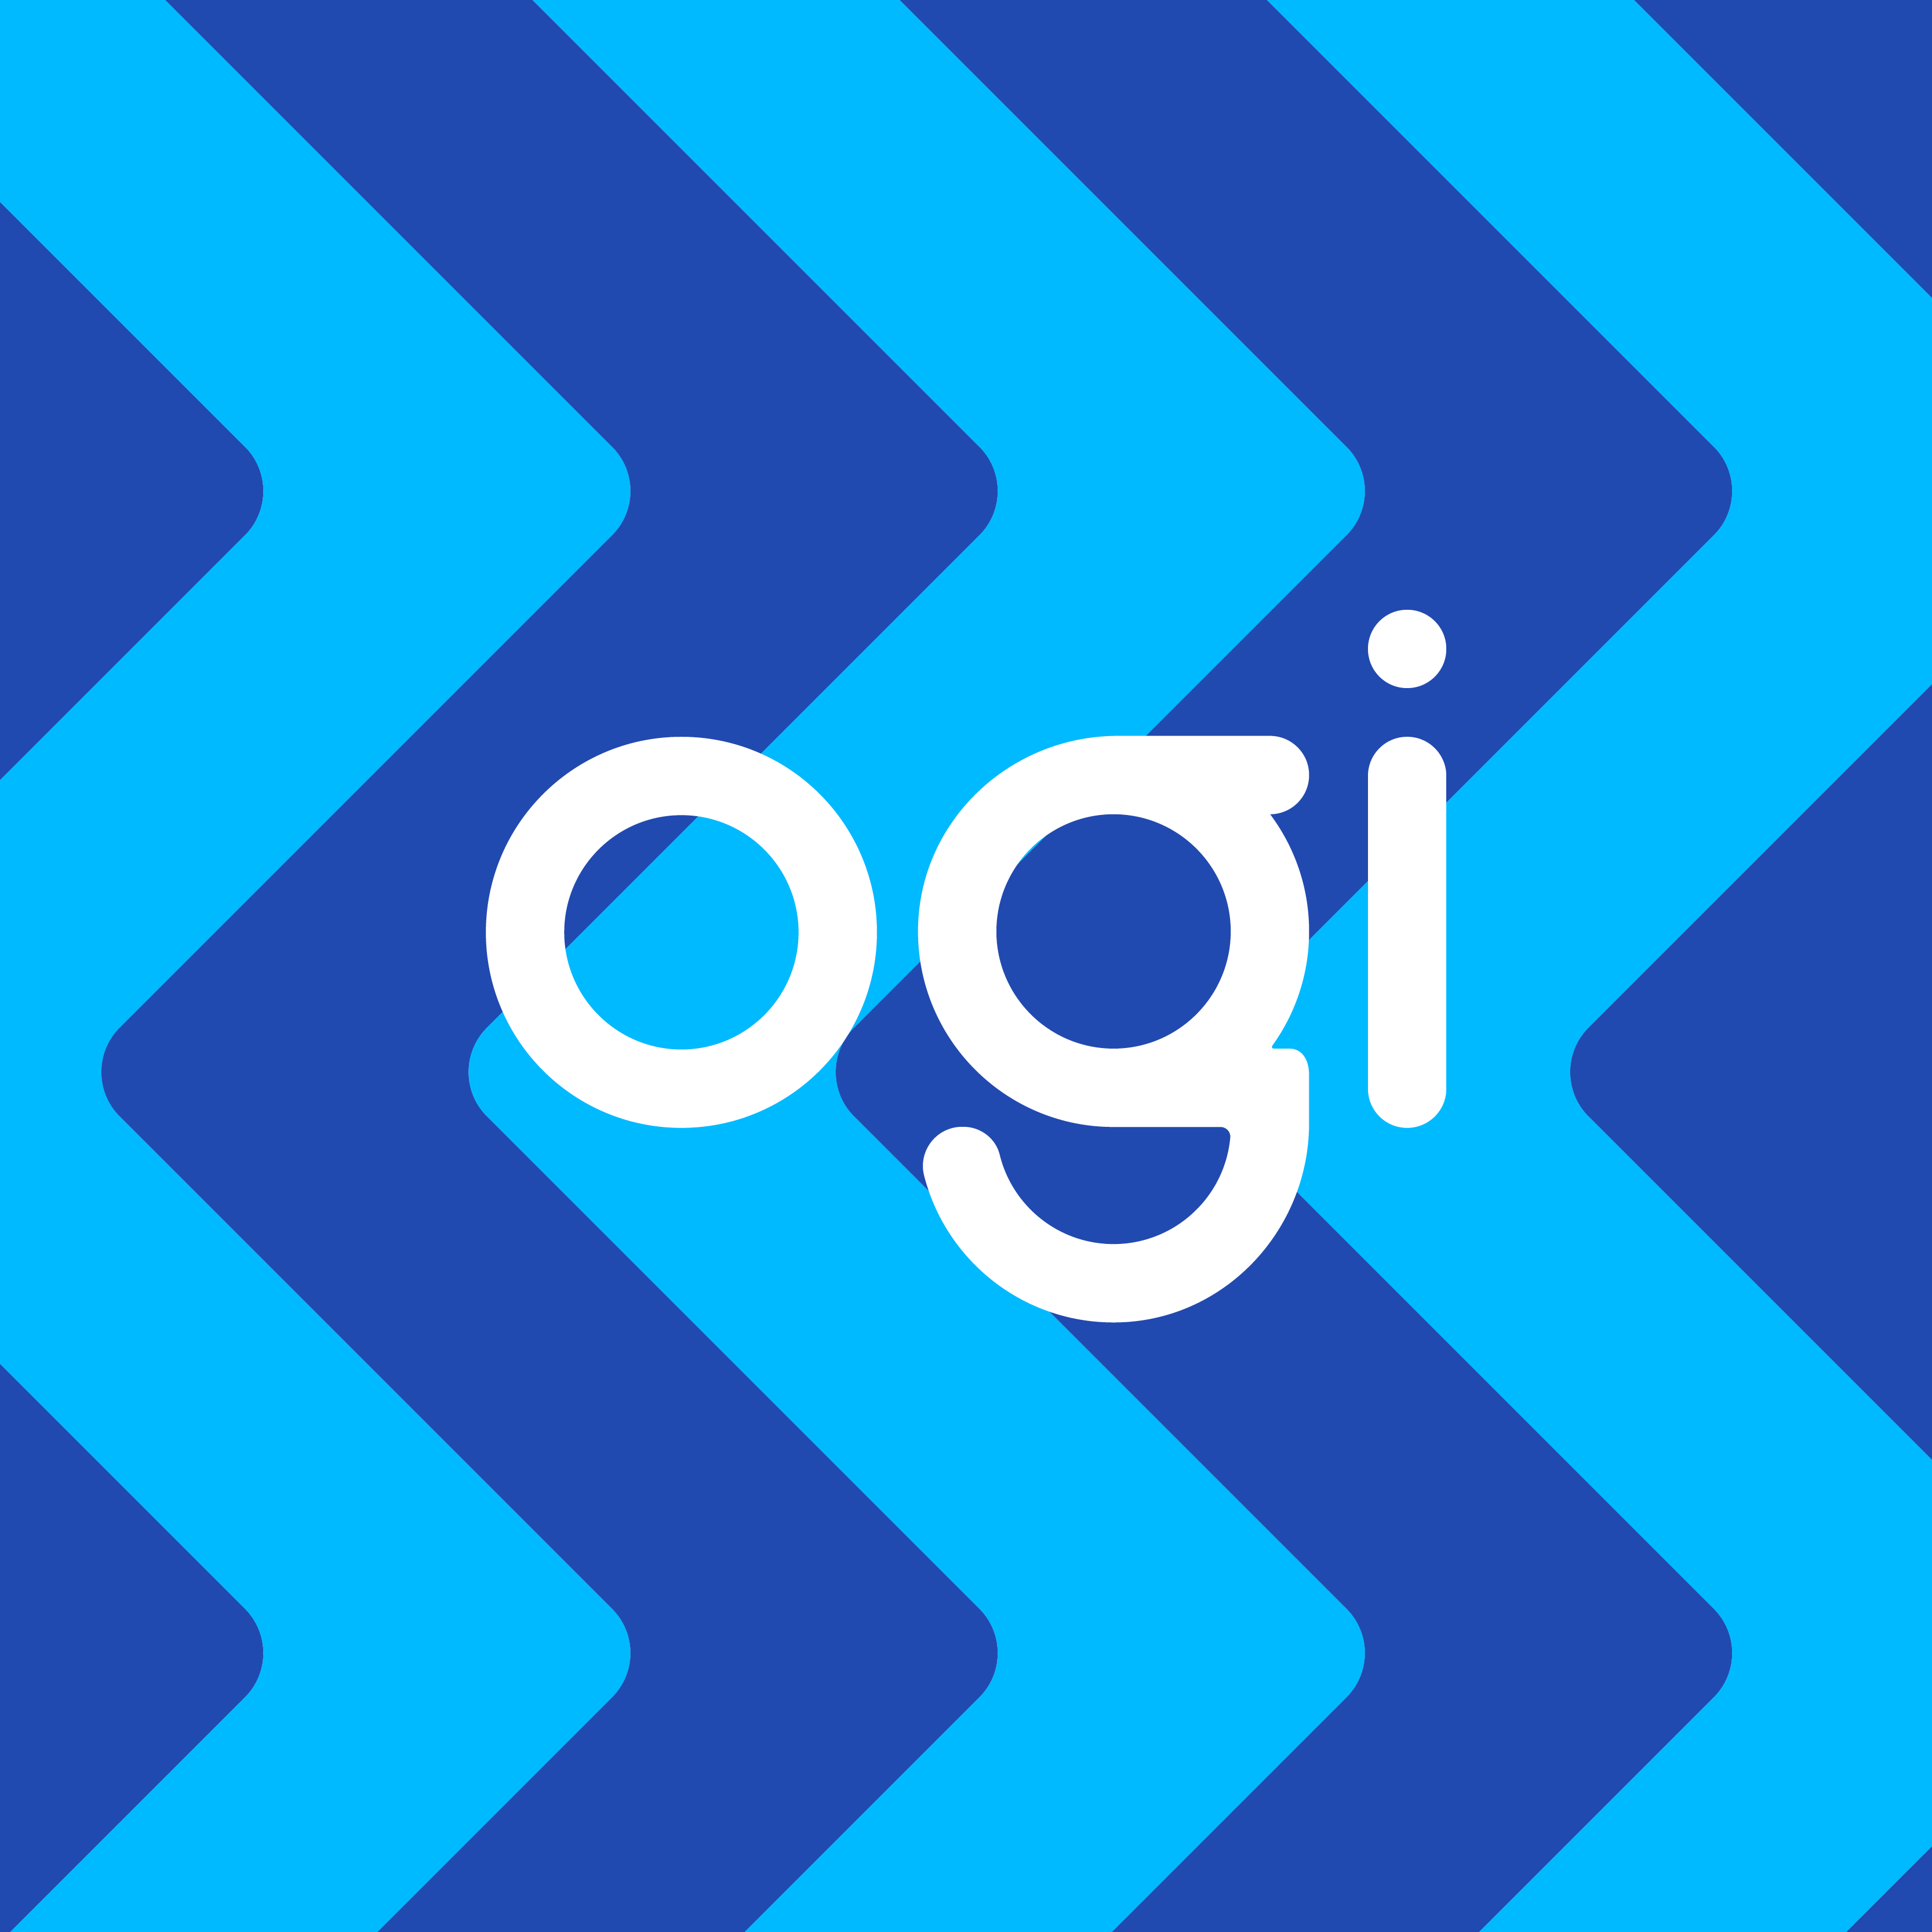 Open GI logo on a alternating light blue and dark blue zigzag pattern background